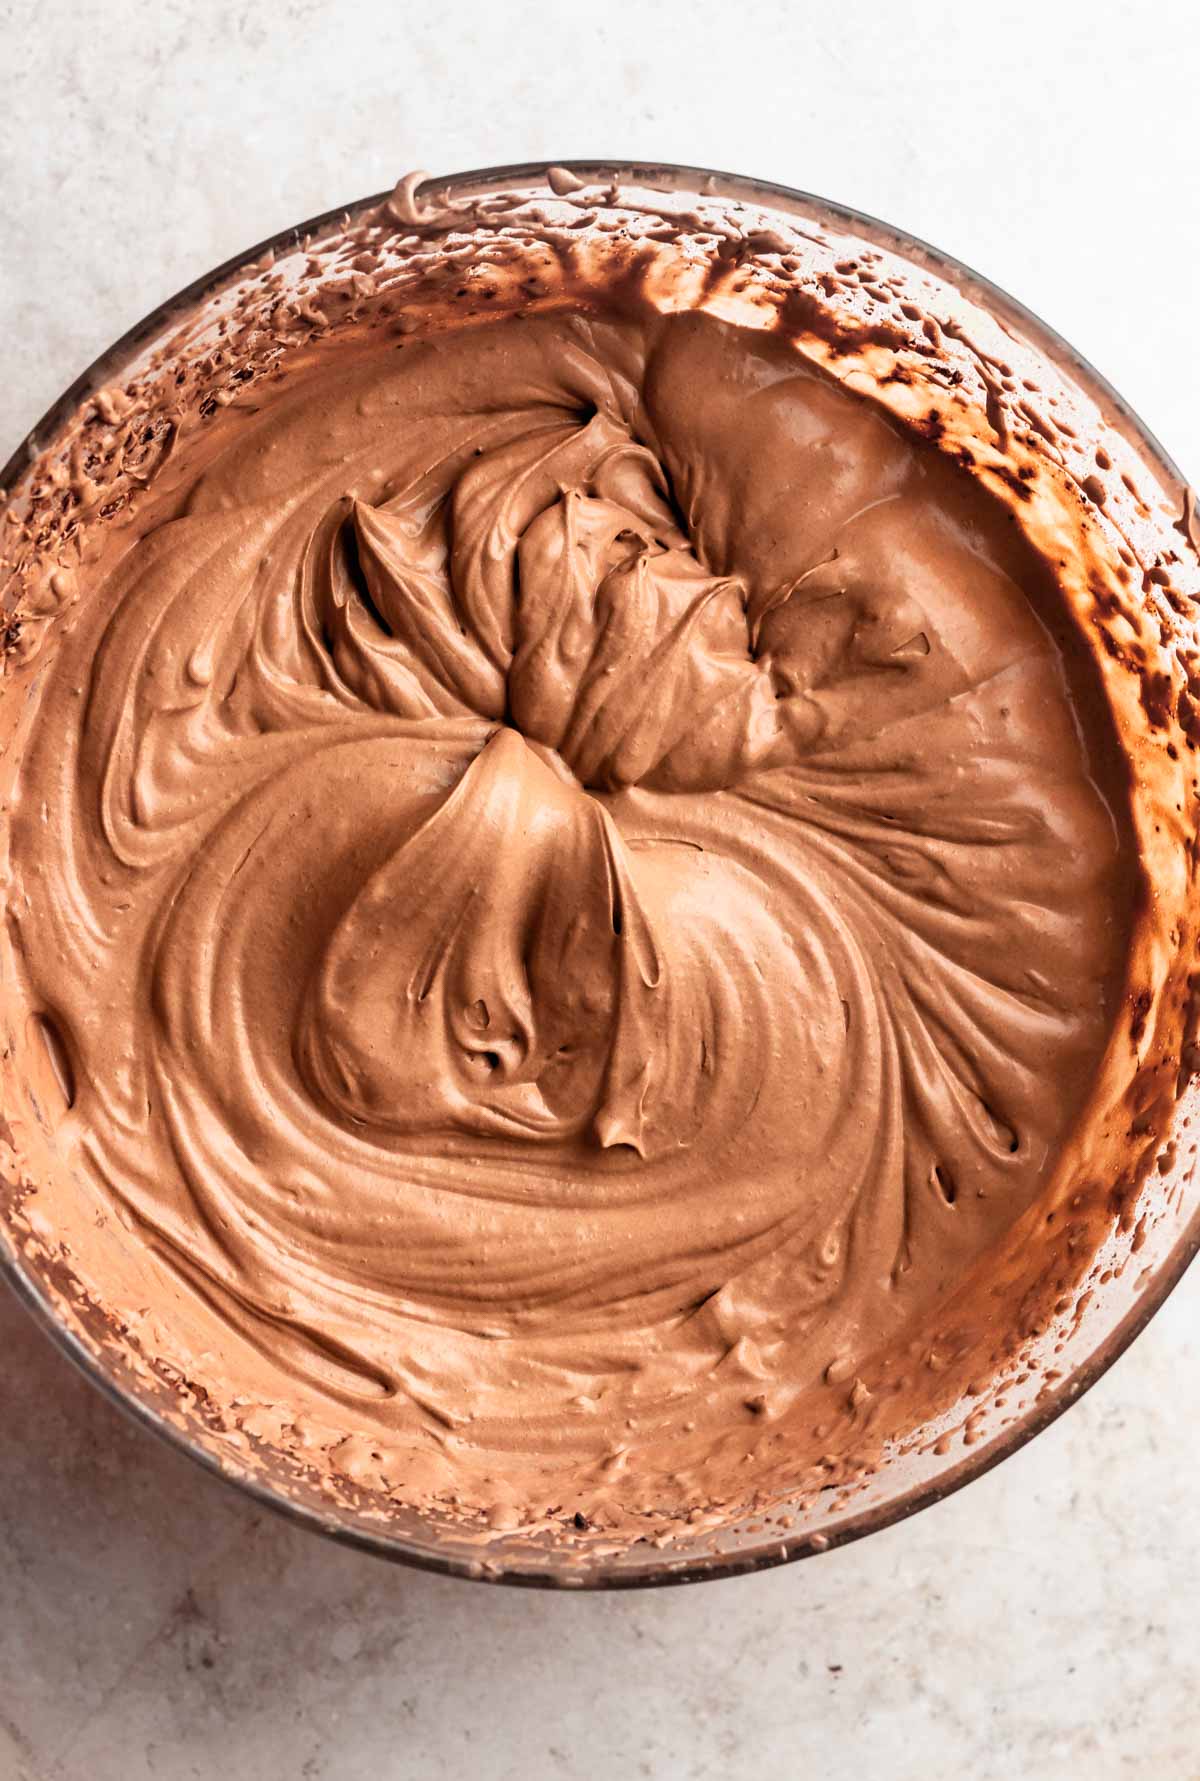 Chocolate whipped cream process shots.